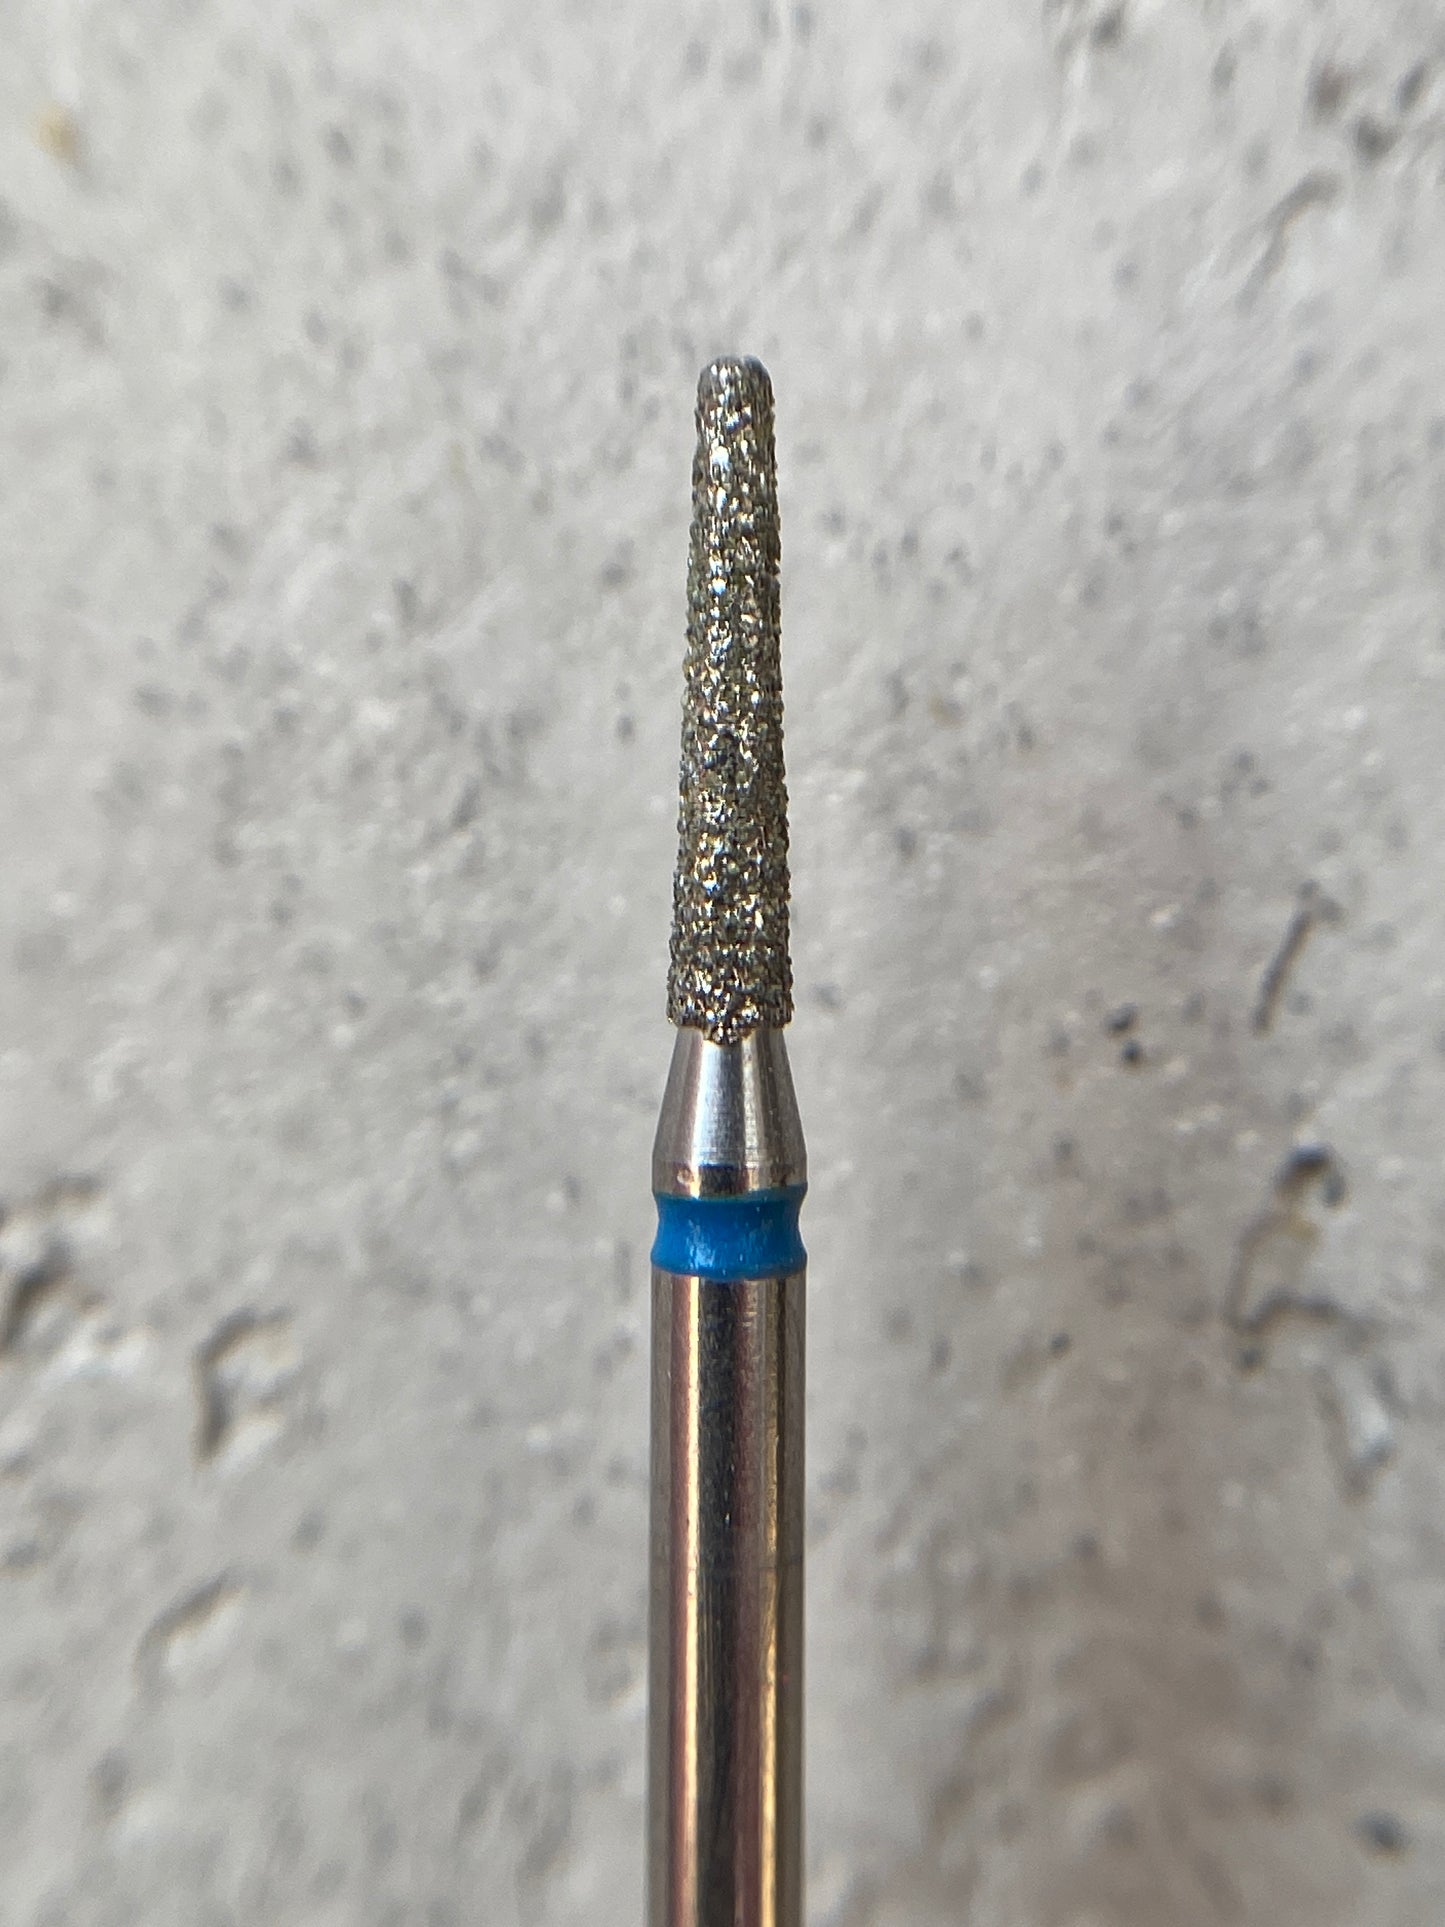 Diamond tip - Stick